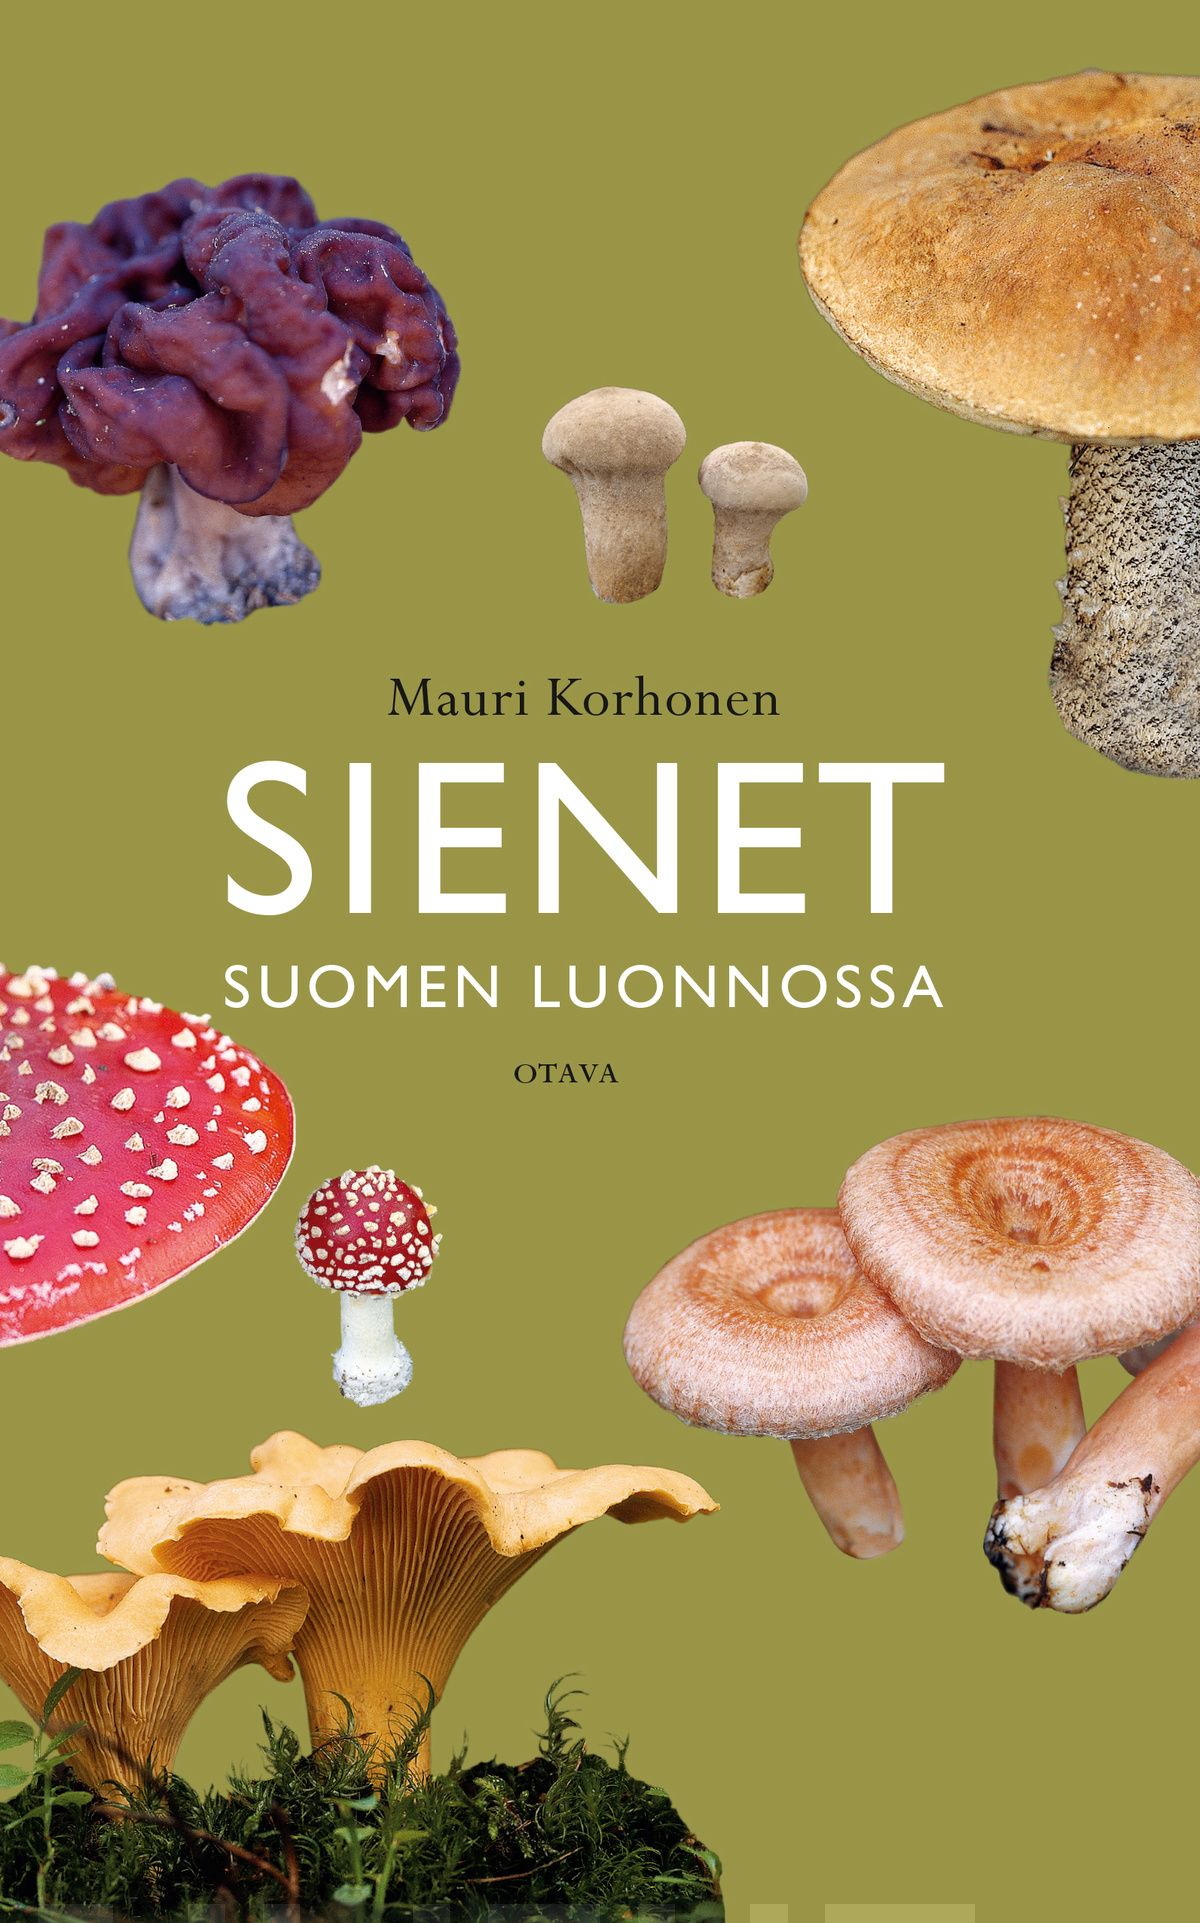 Sienet Suomen luonnossa (Paperback, Finnish language, Otava)